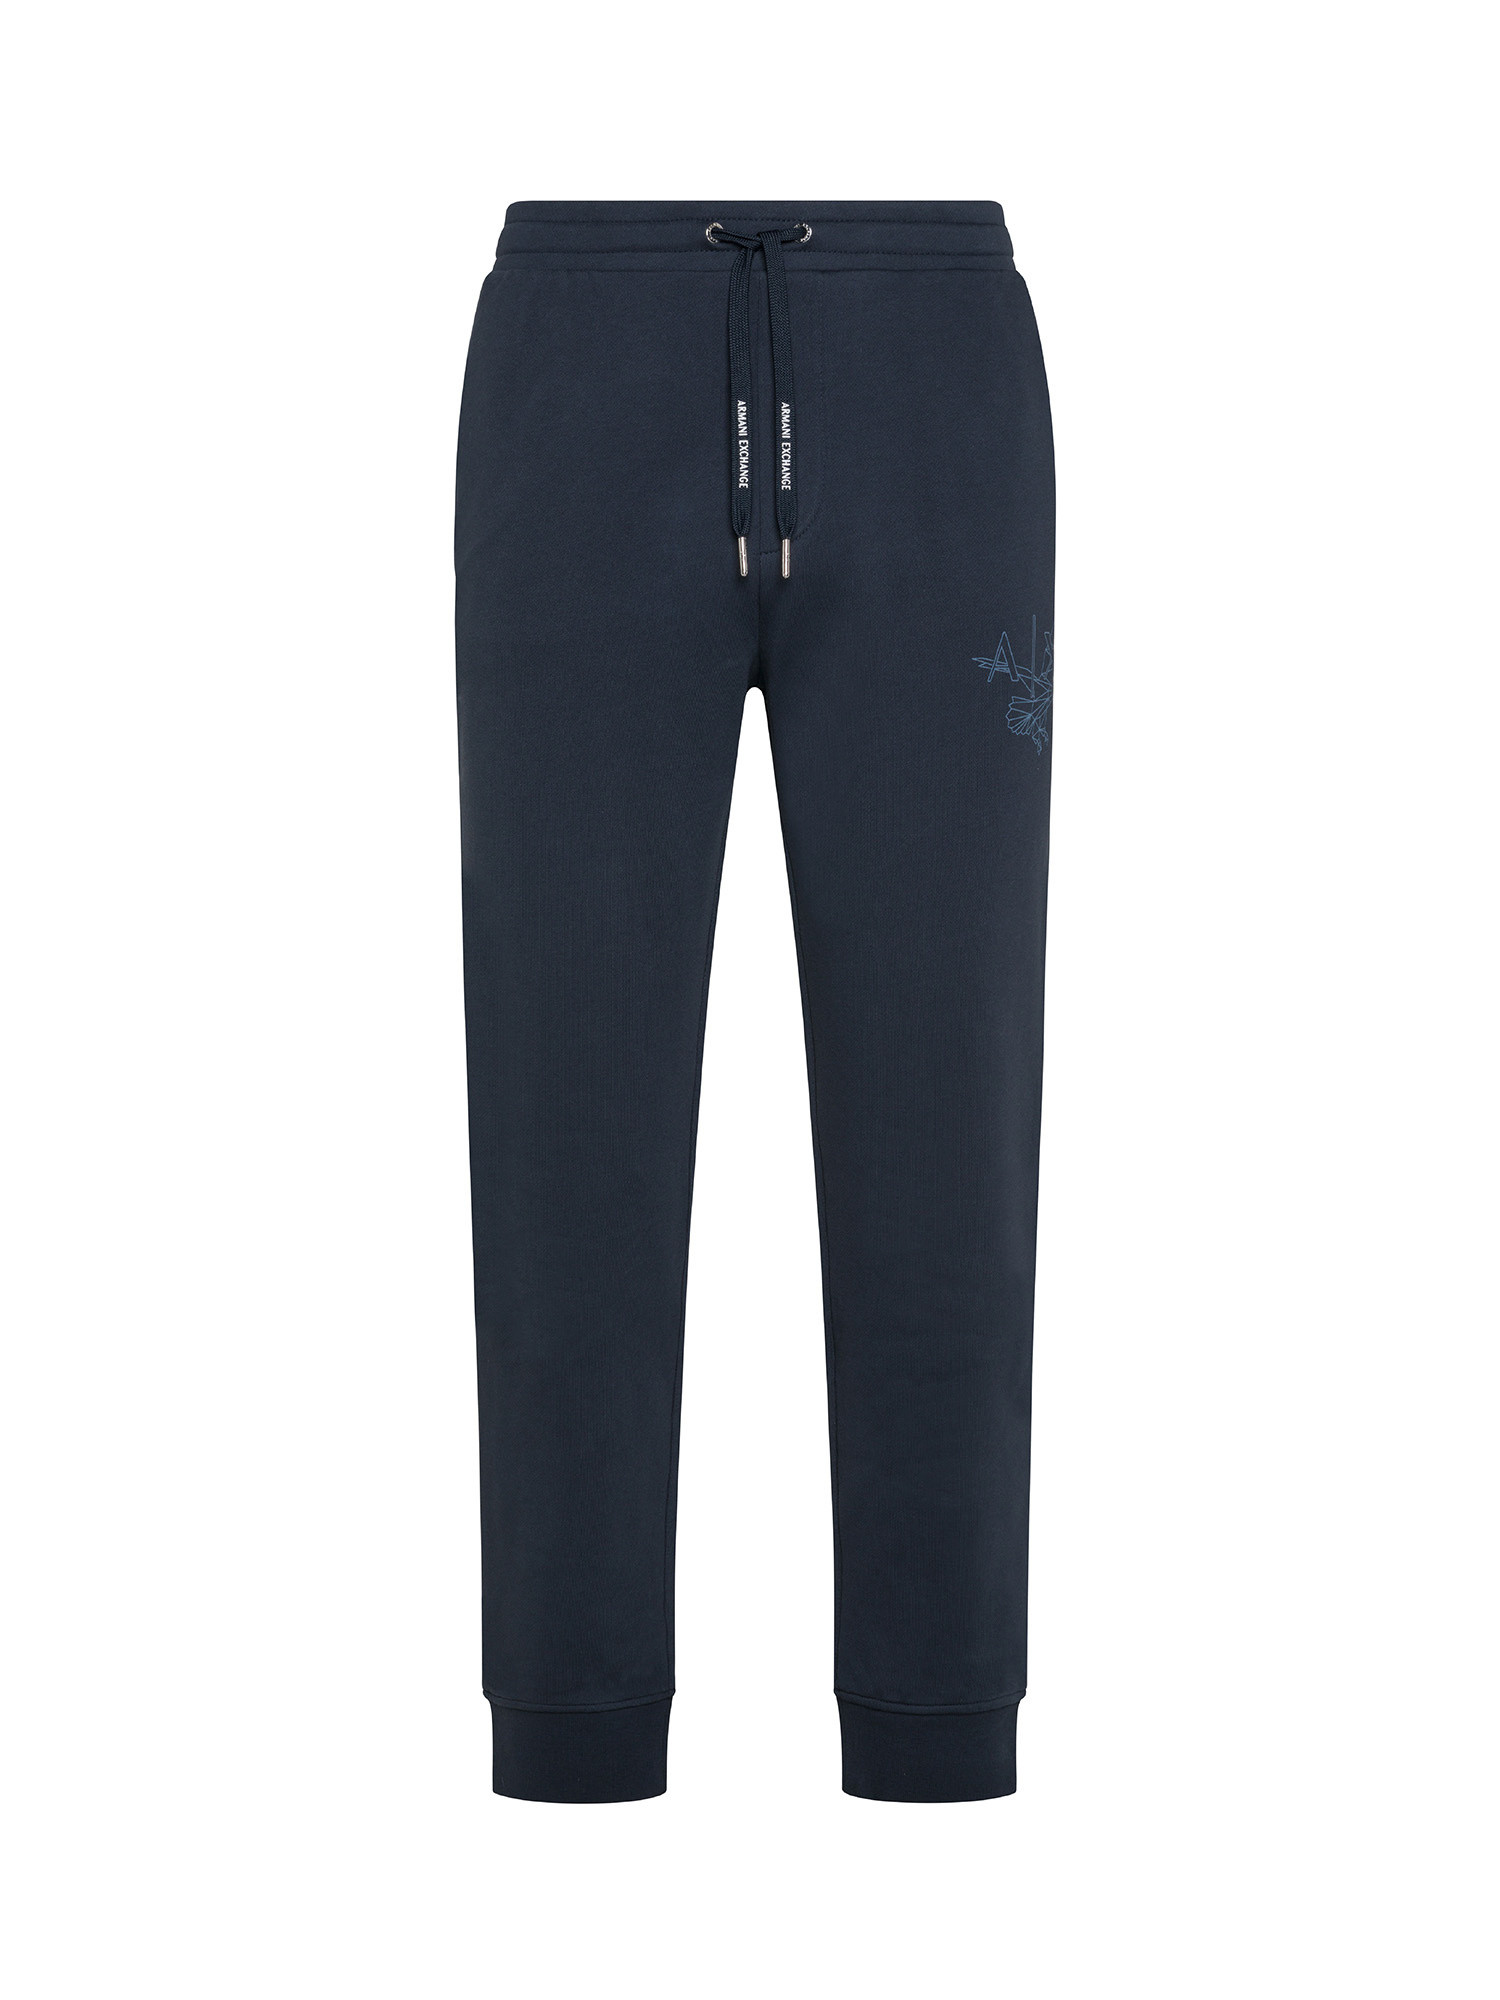 Armani Exchange - Sweatpants in organic cotton, Dark Blue, large image number 0